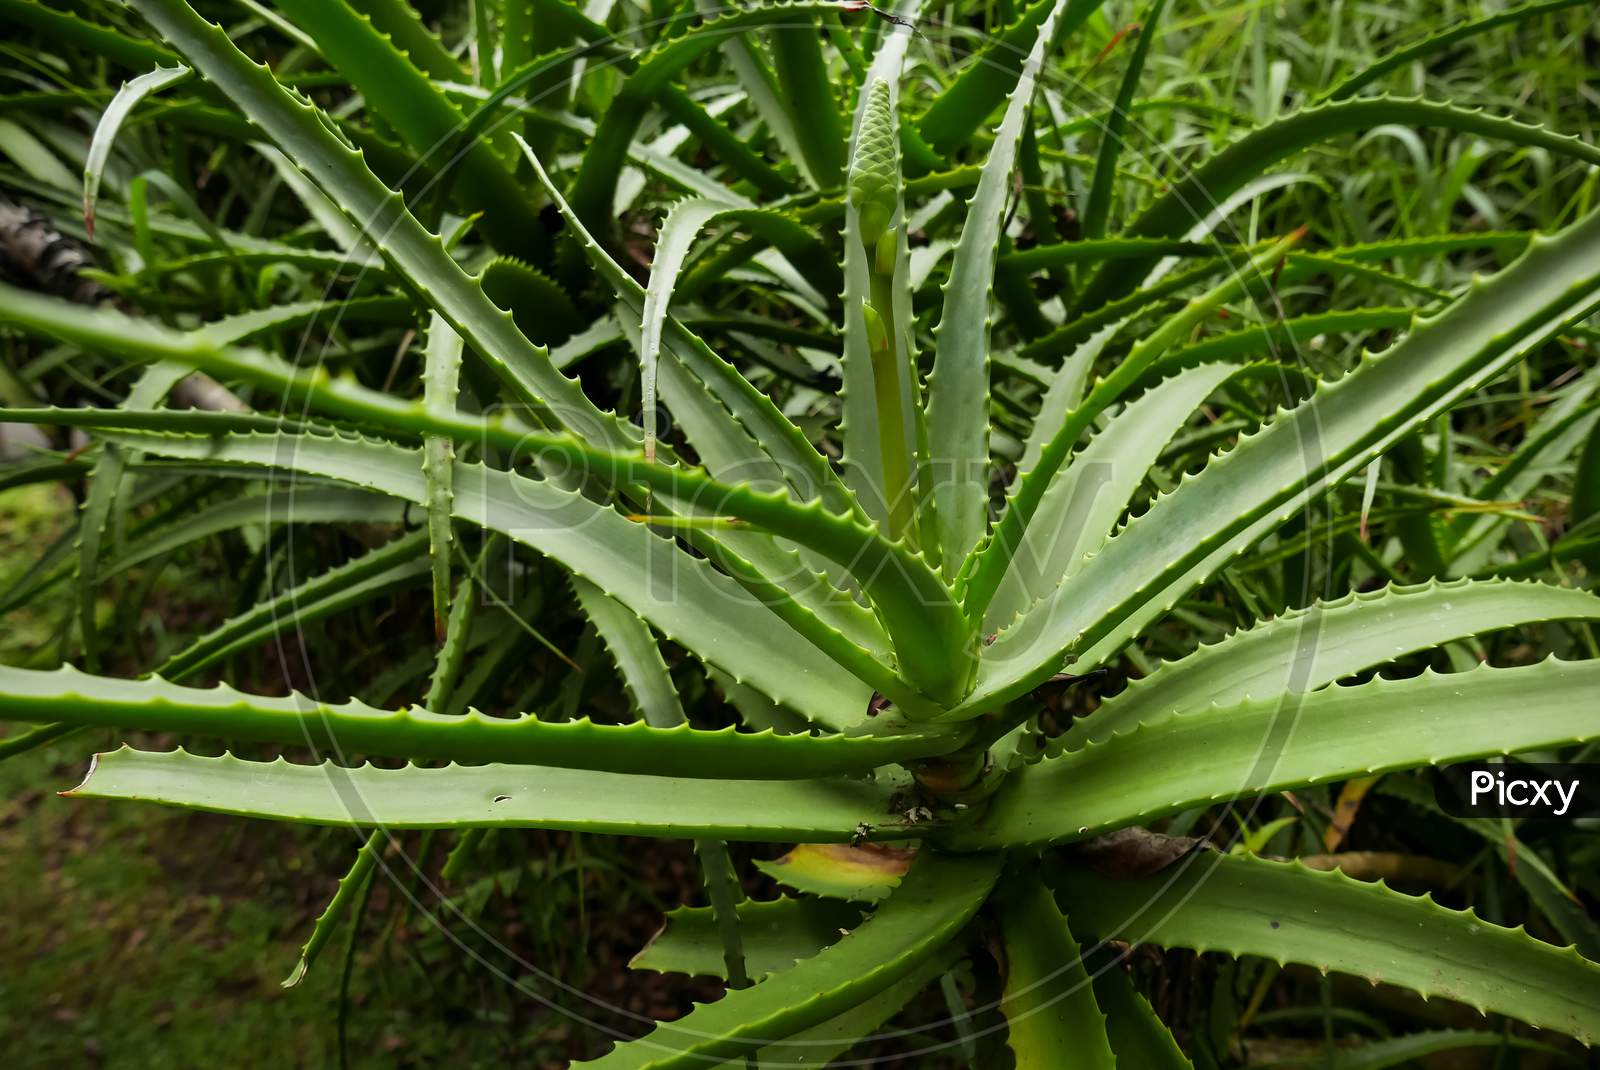 Aloe vera, popular medicinal plant organically grown in natural outdoor